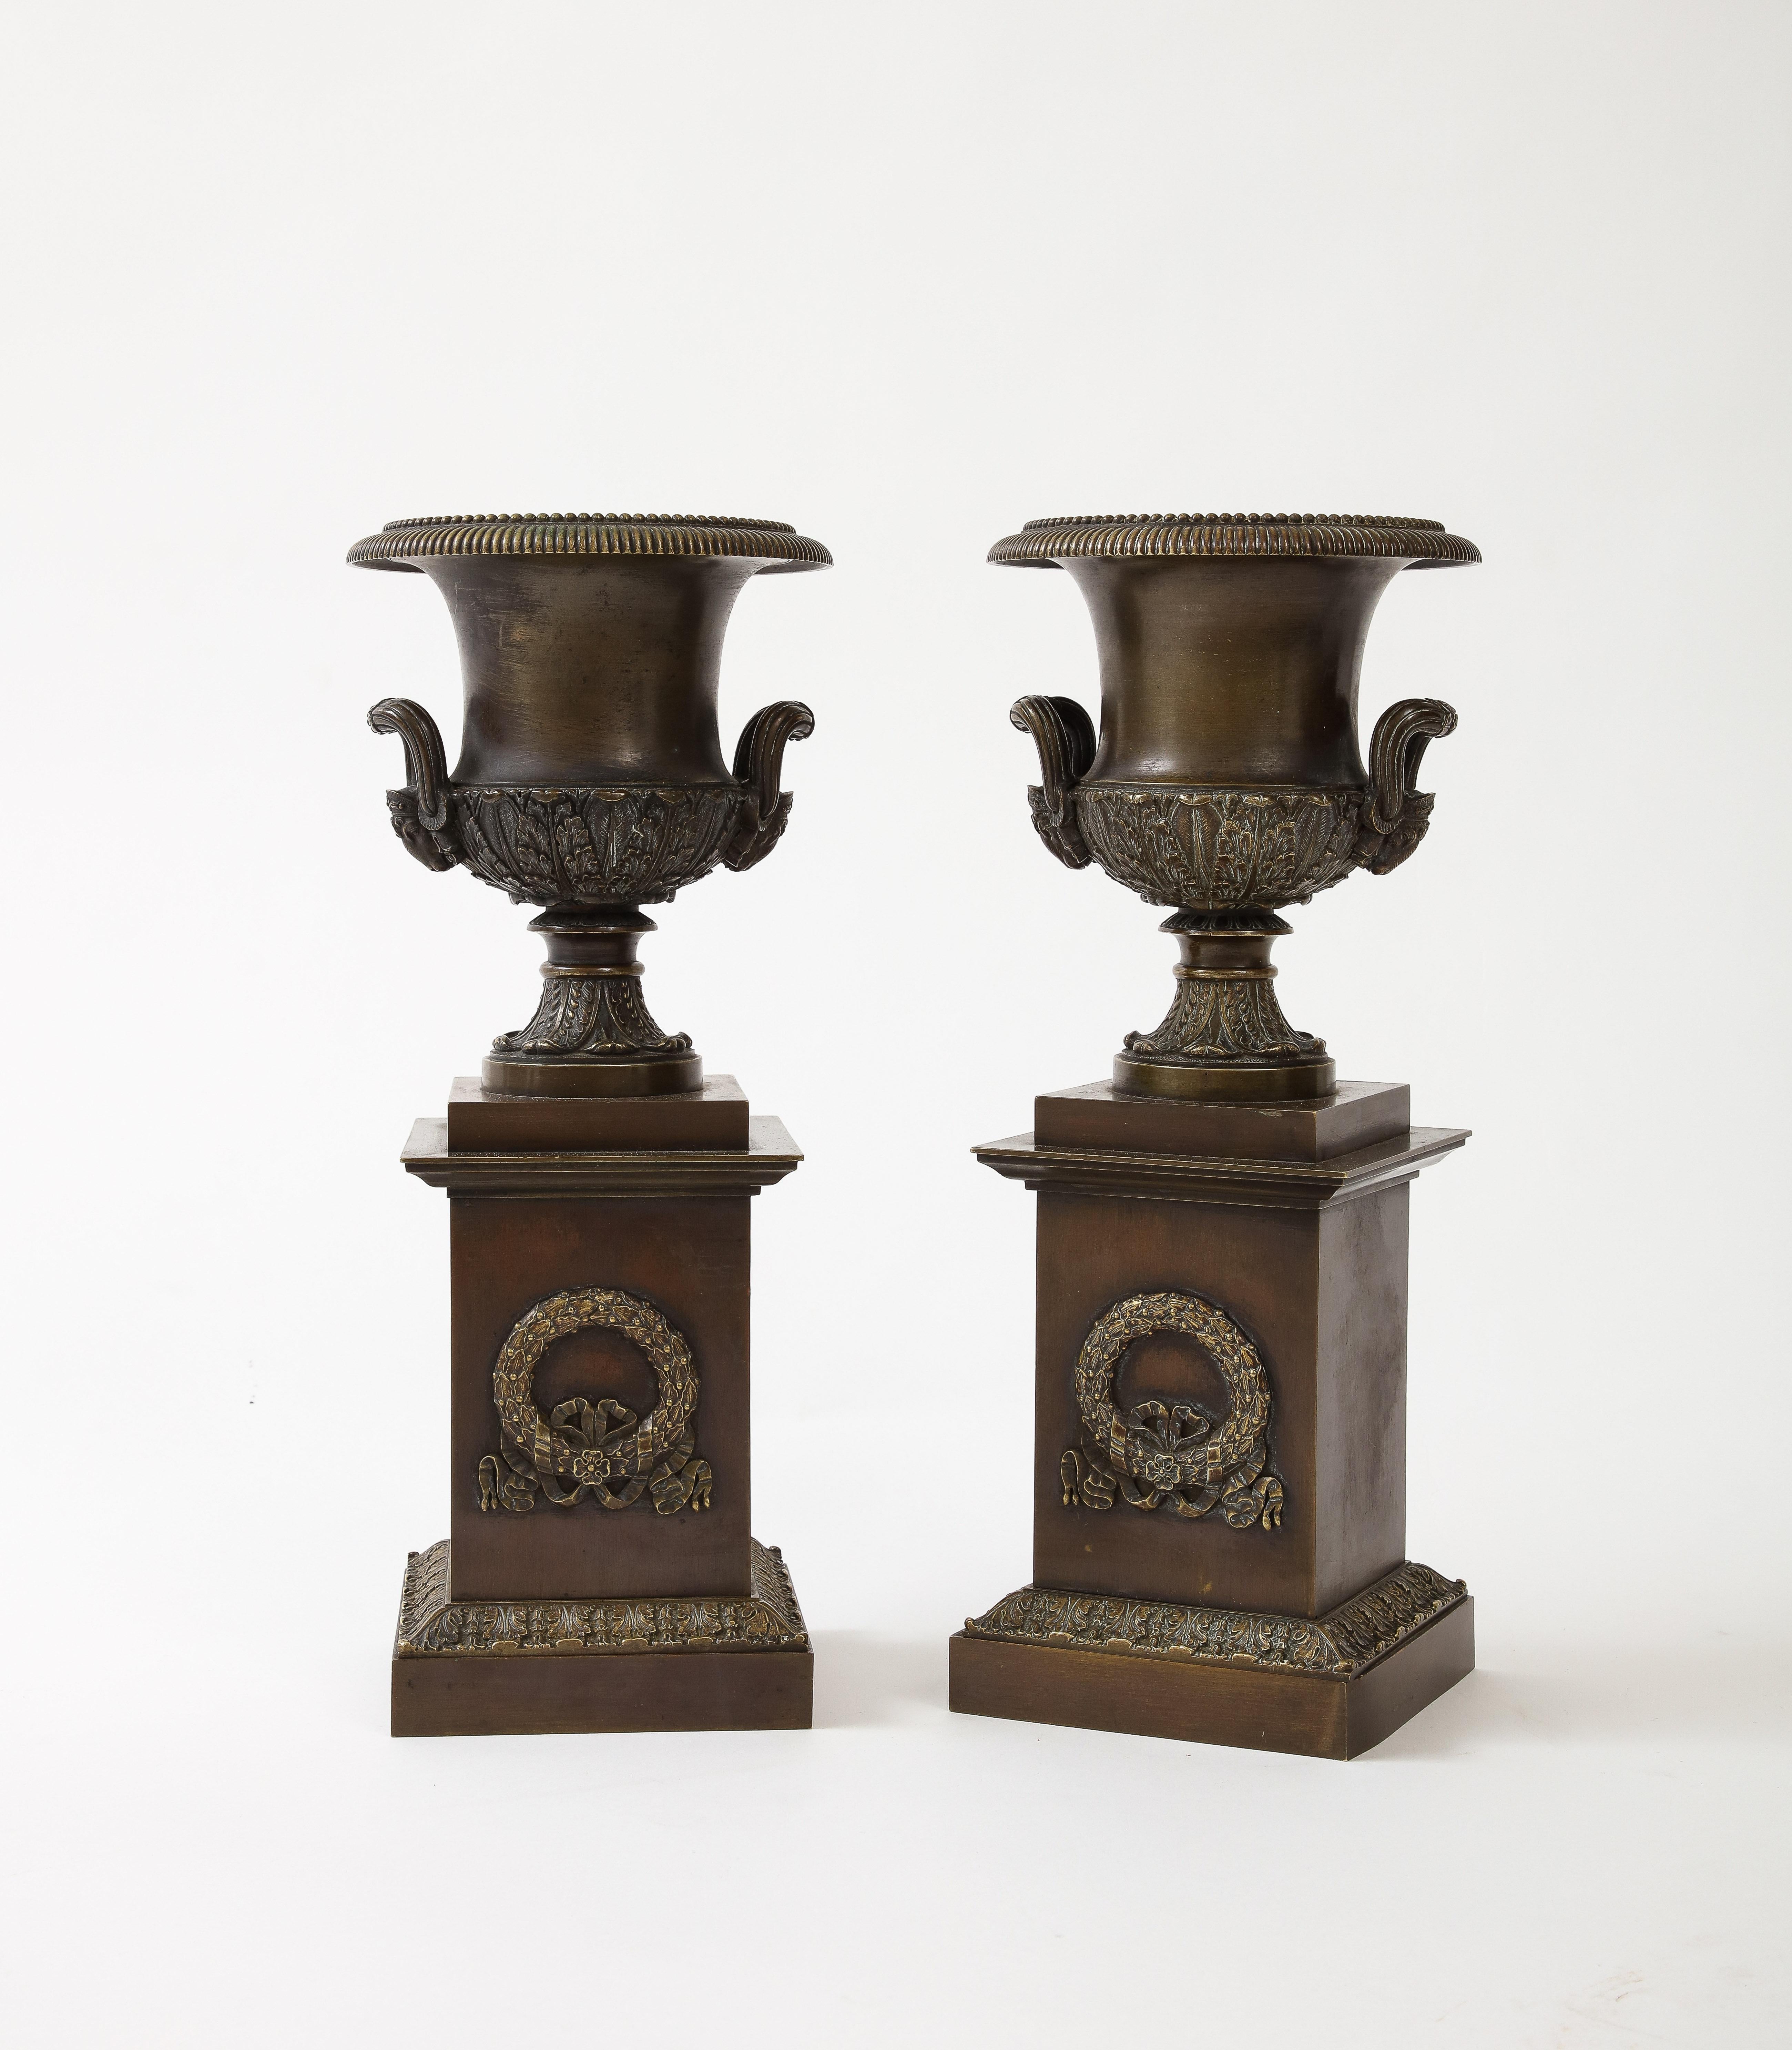 Paire of Patinated Bronze Empire Period Medici Urns
